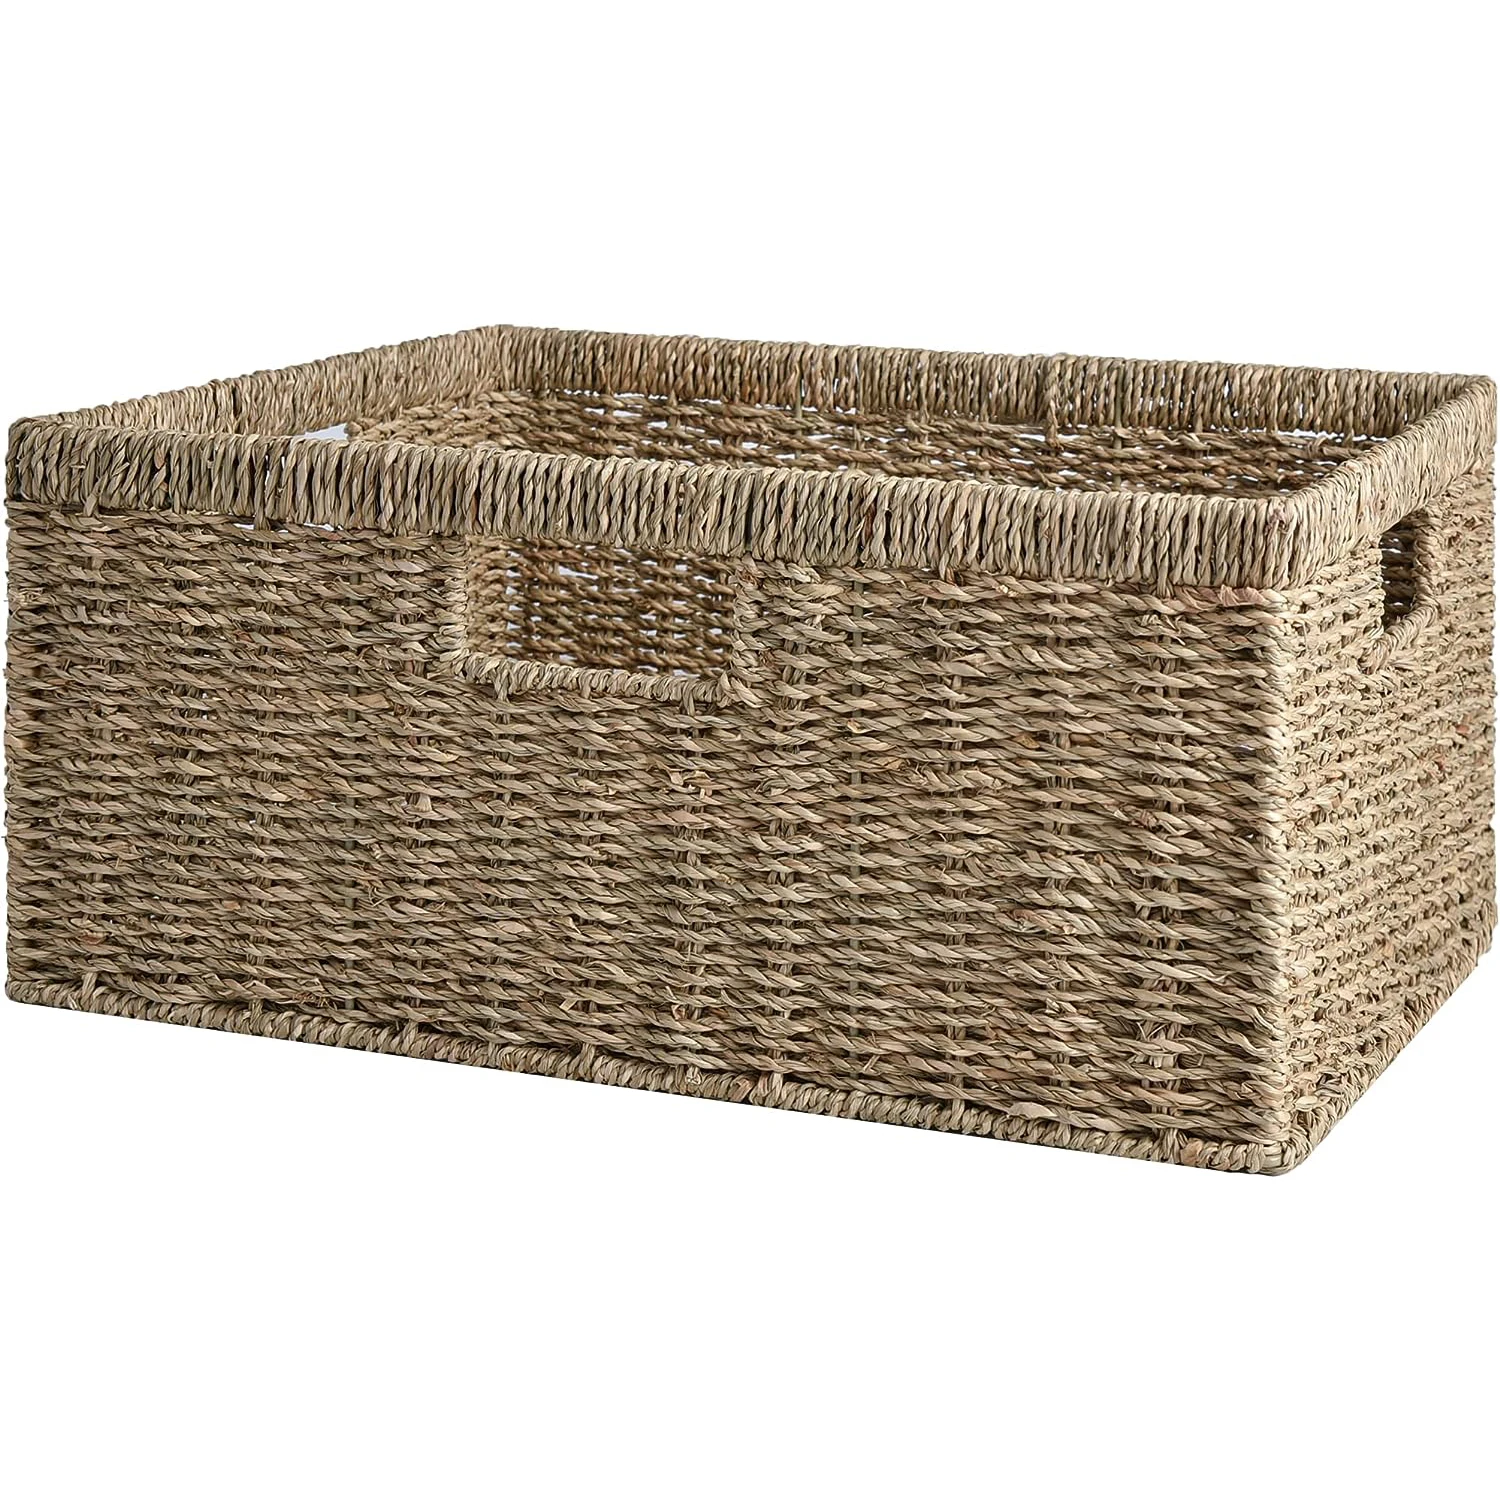 Wicker Basket for Orgainzing Seagrass Storage Basket with Built-in Handles  Handwoven Wicker Basket for Blanket